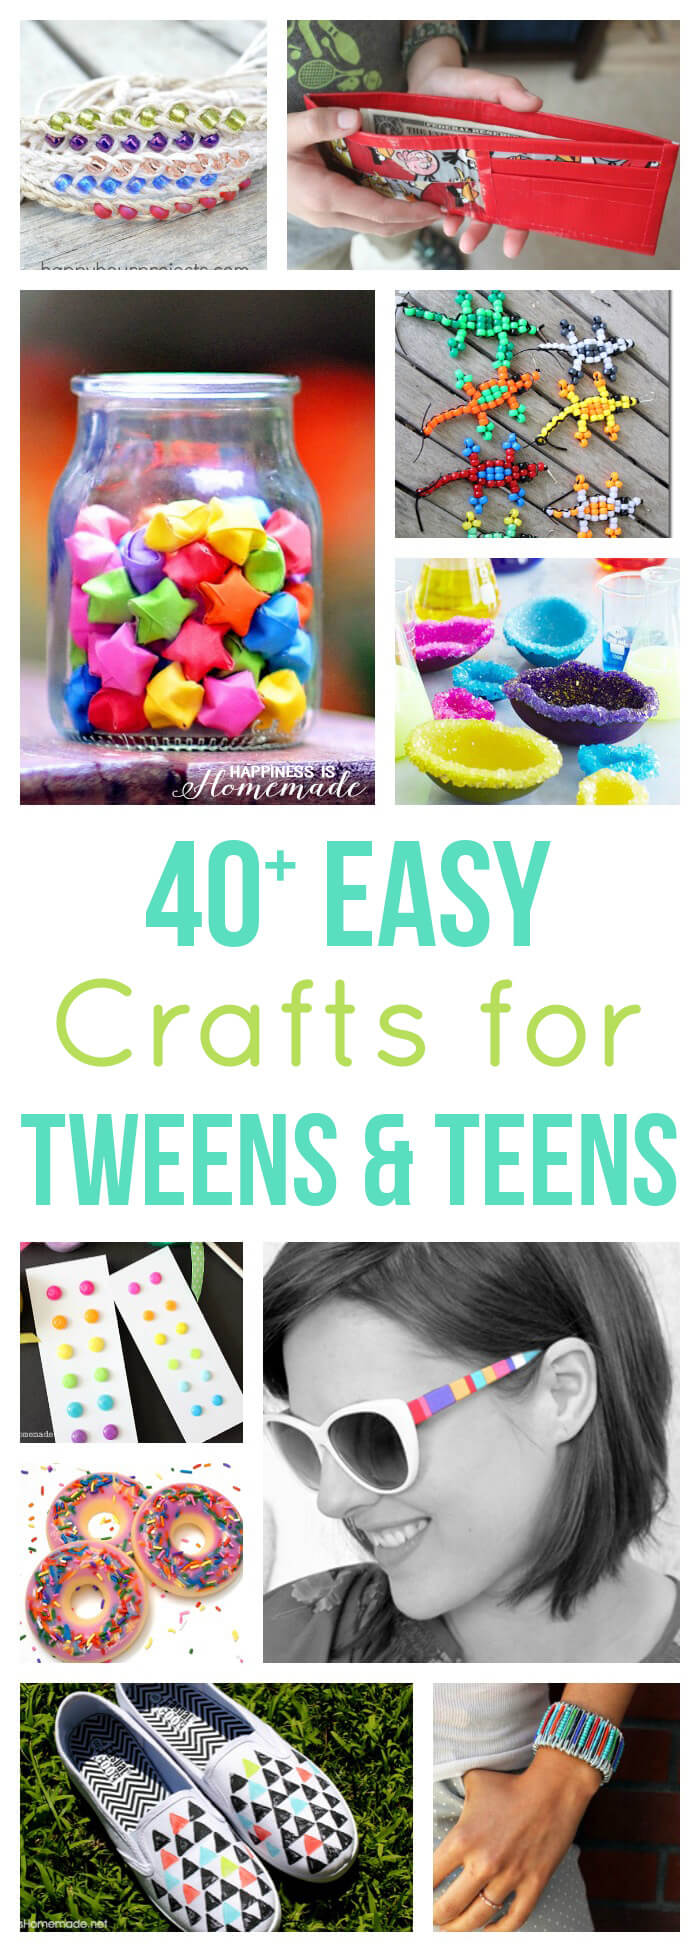 40+ Easy Crafts for Teens & Tweens - Happiness is Homemade - 40+ Easy Crafts for Teens & Tweens - Happiness is Homemade -   16 diy Crafts for tweens ideas